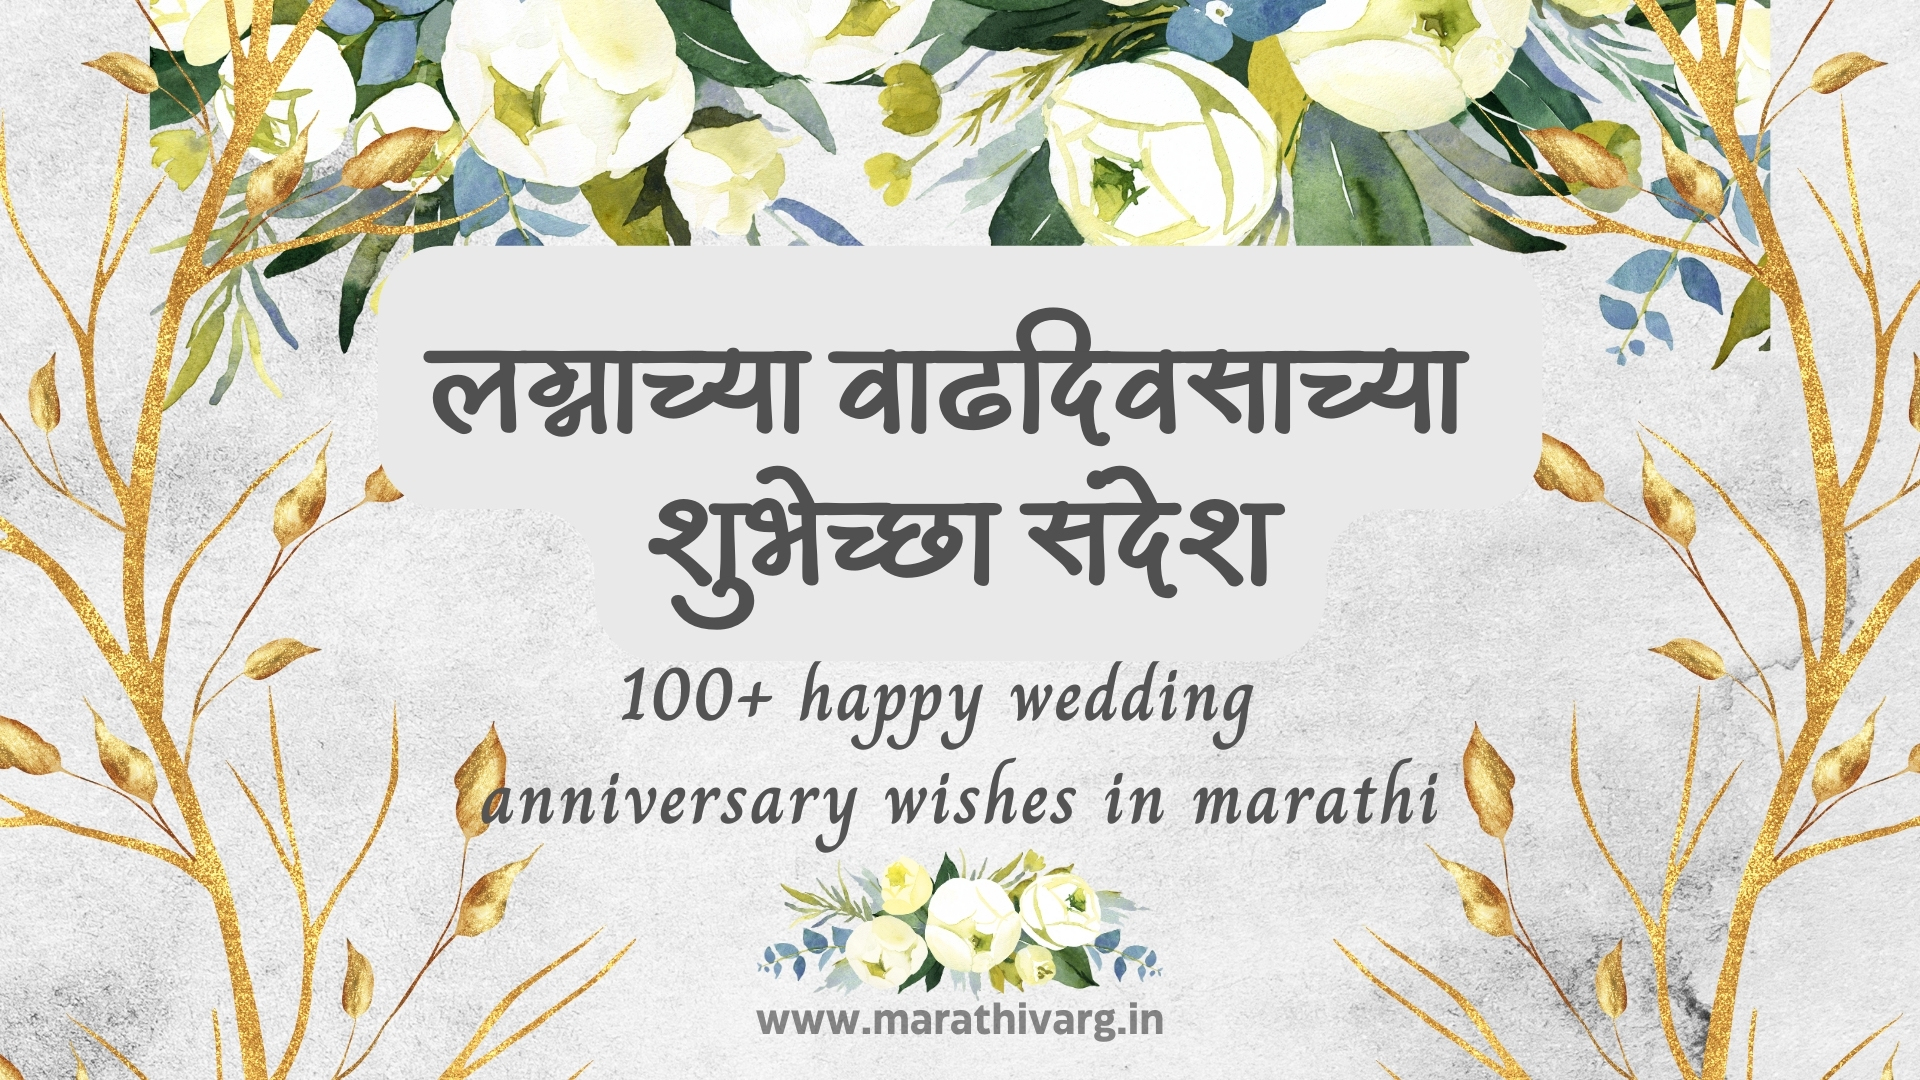 लग्नाच्या वाढदिवसाच्या शुभेच्छा संदेश|100+ happy anniversary wishes in marathi